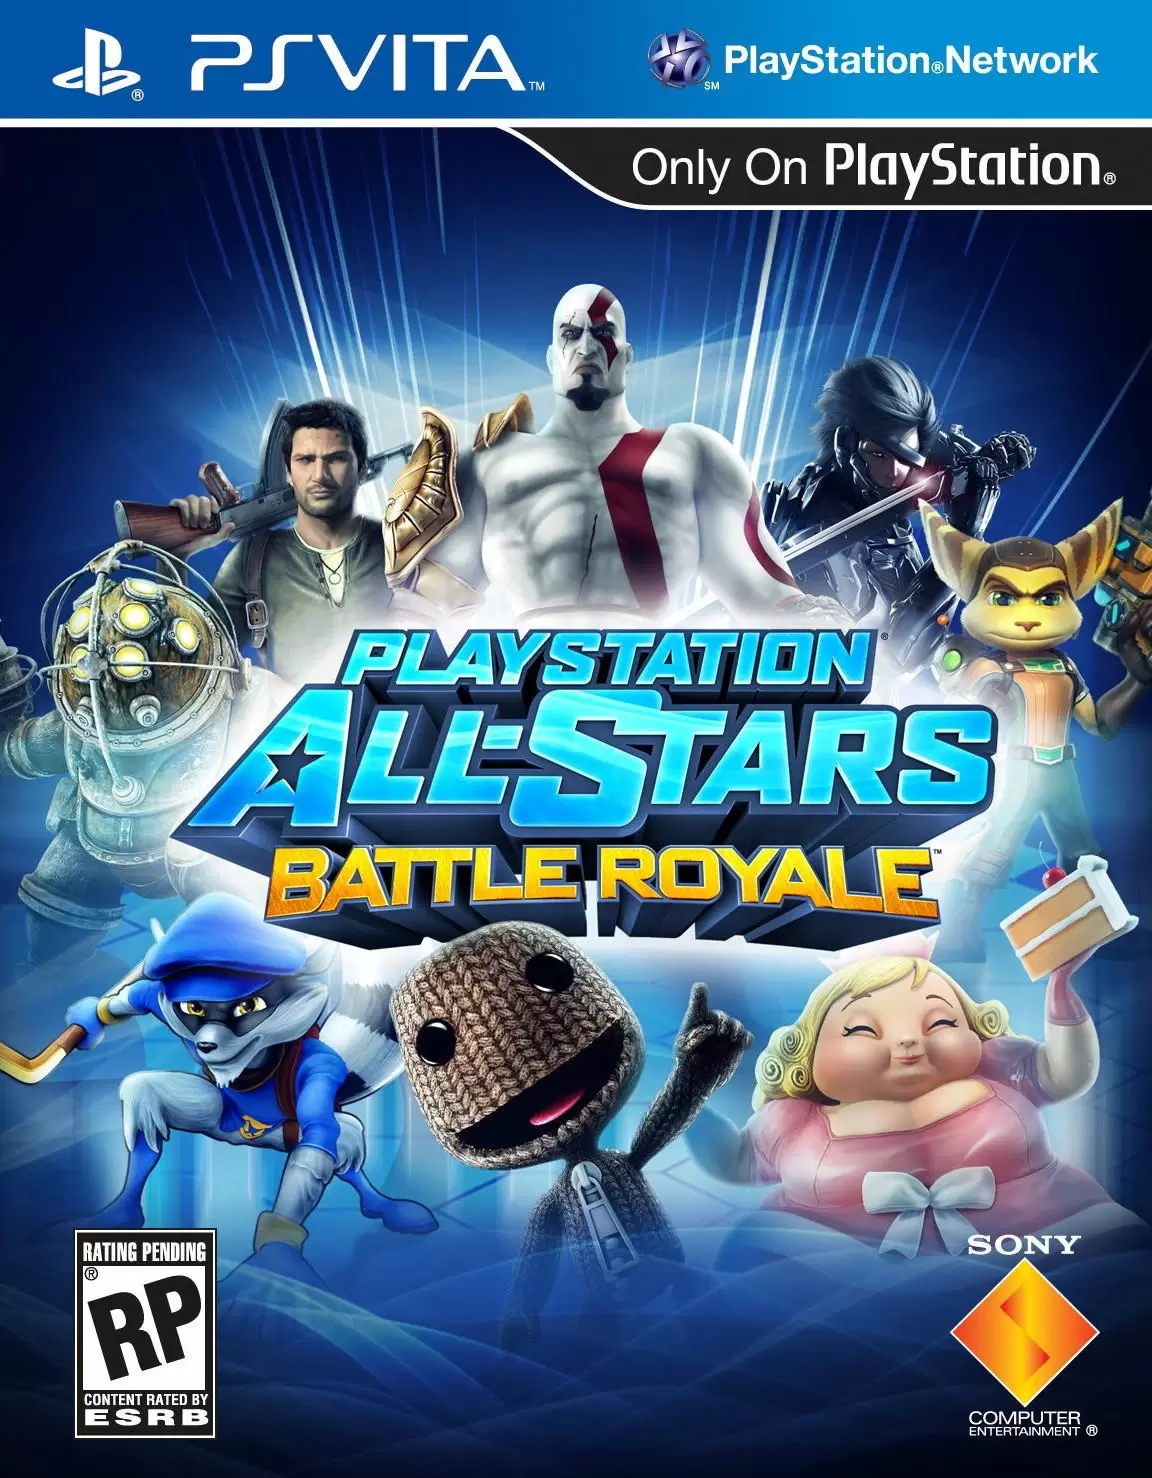 PS Vita Games - PlayStation All-Stars Battle Royale